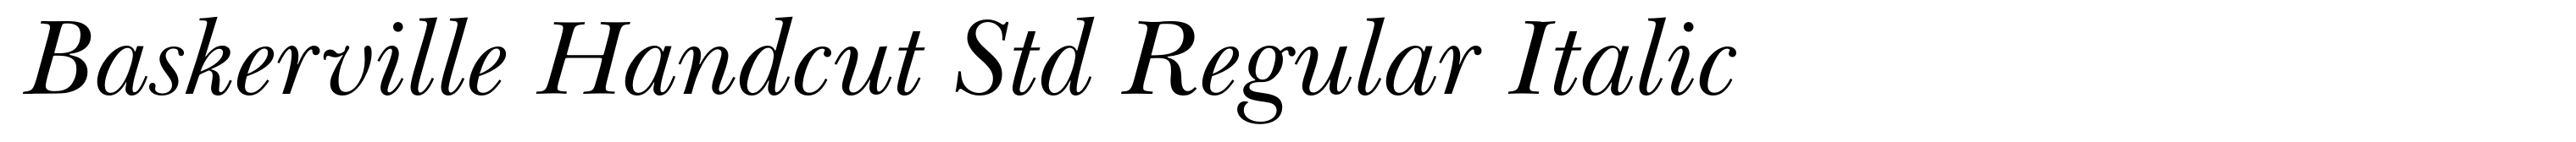 Baskerville Handcut Std Regular Italic